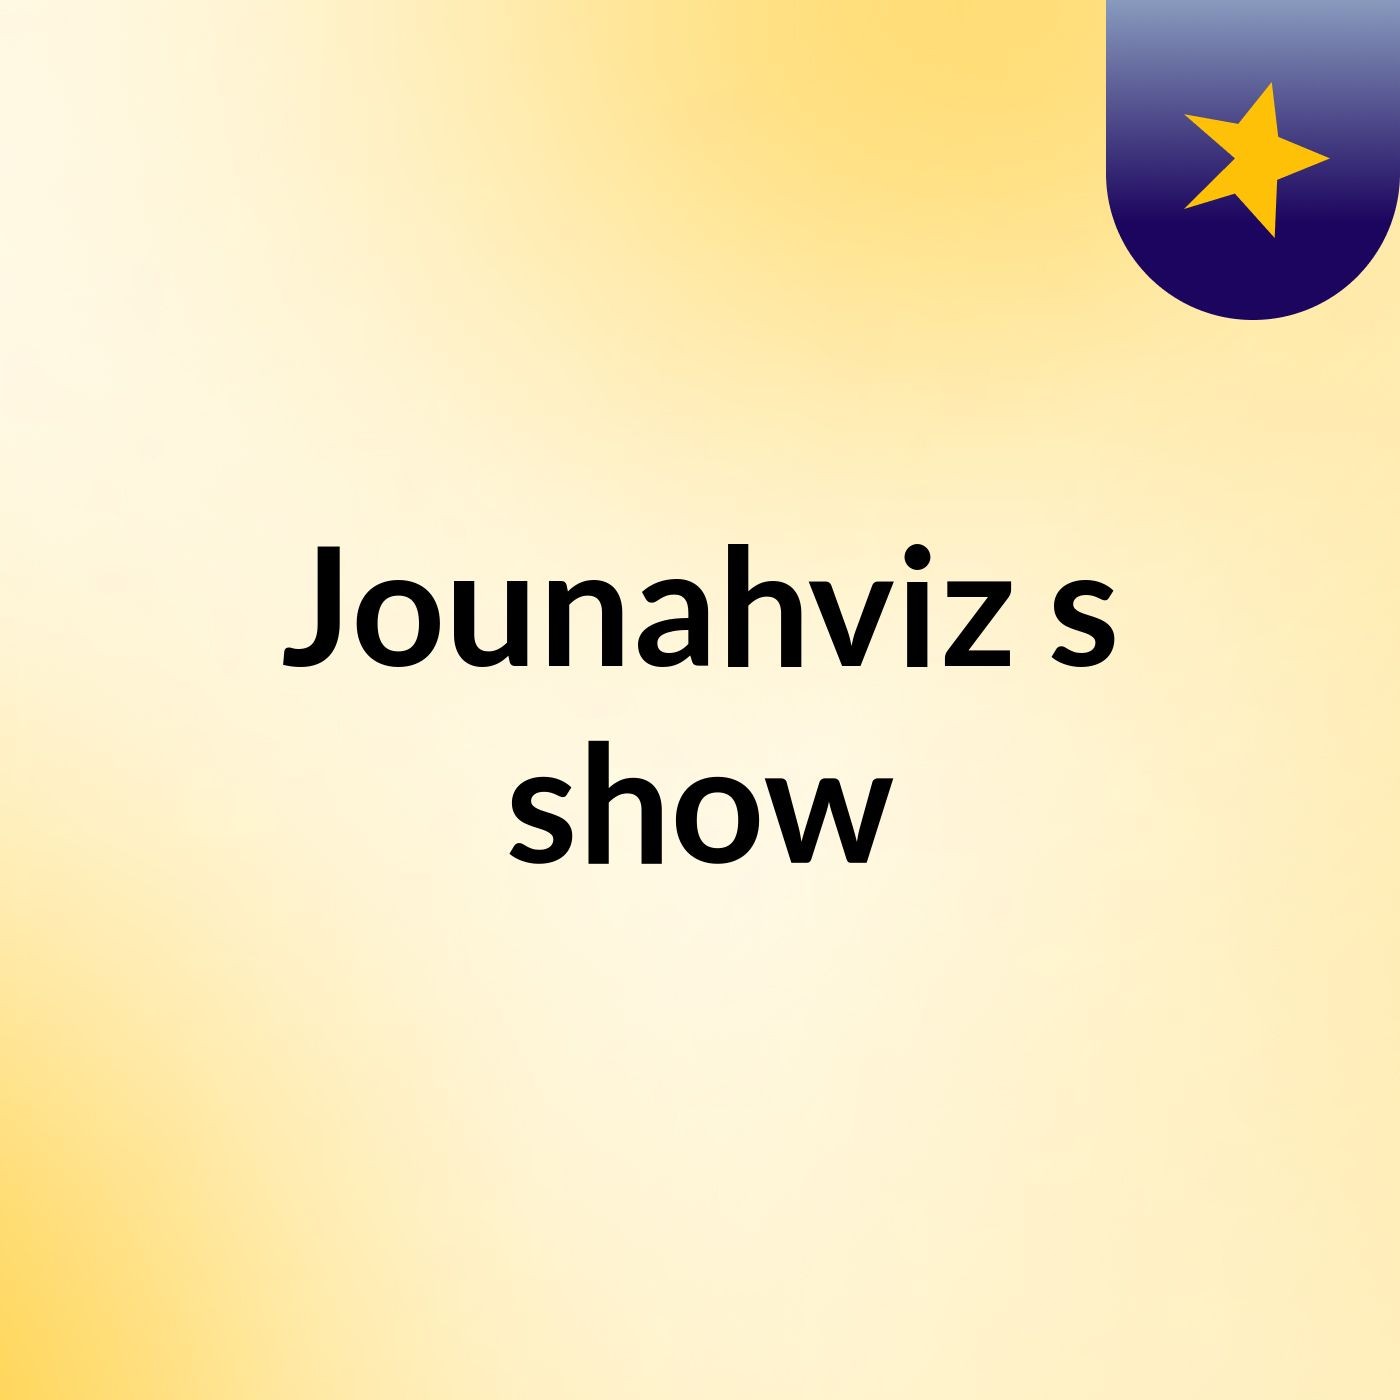 Jounahviz's show